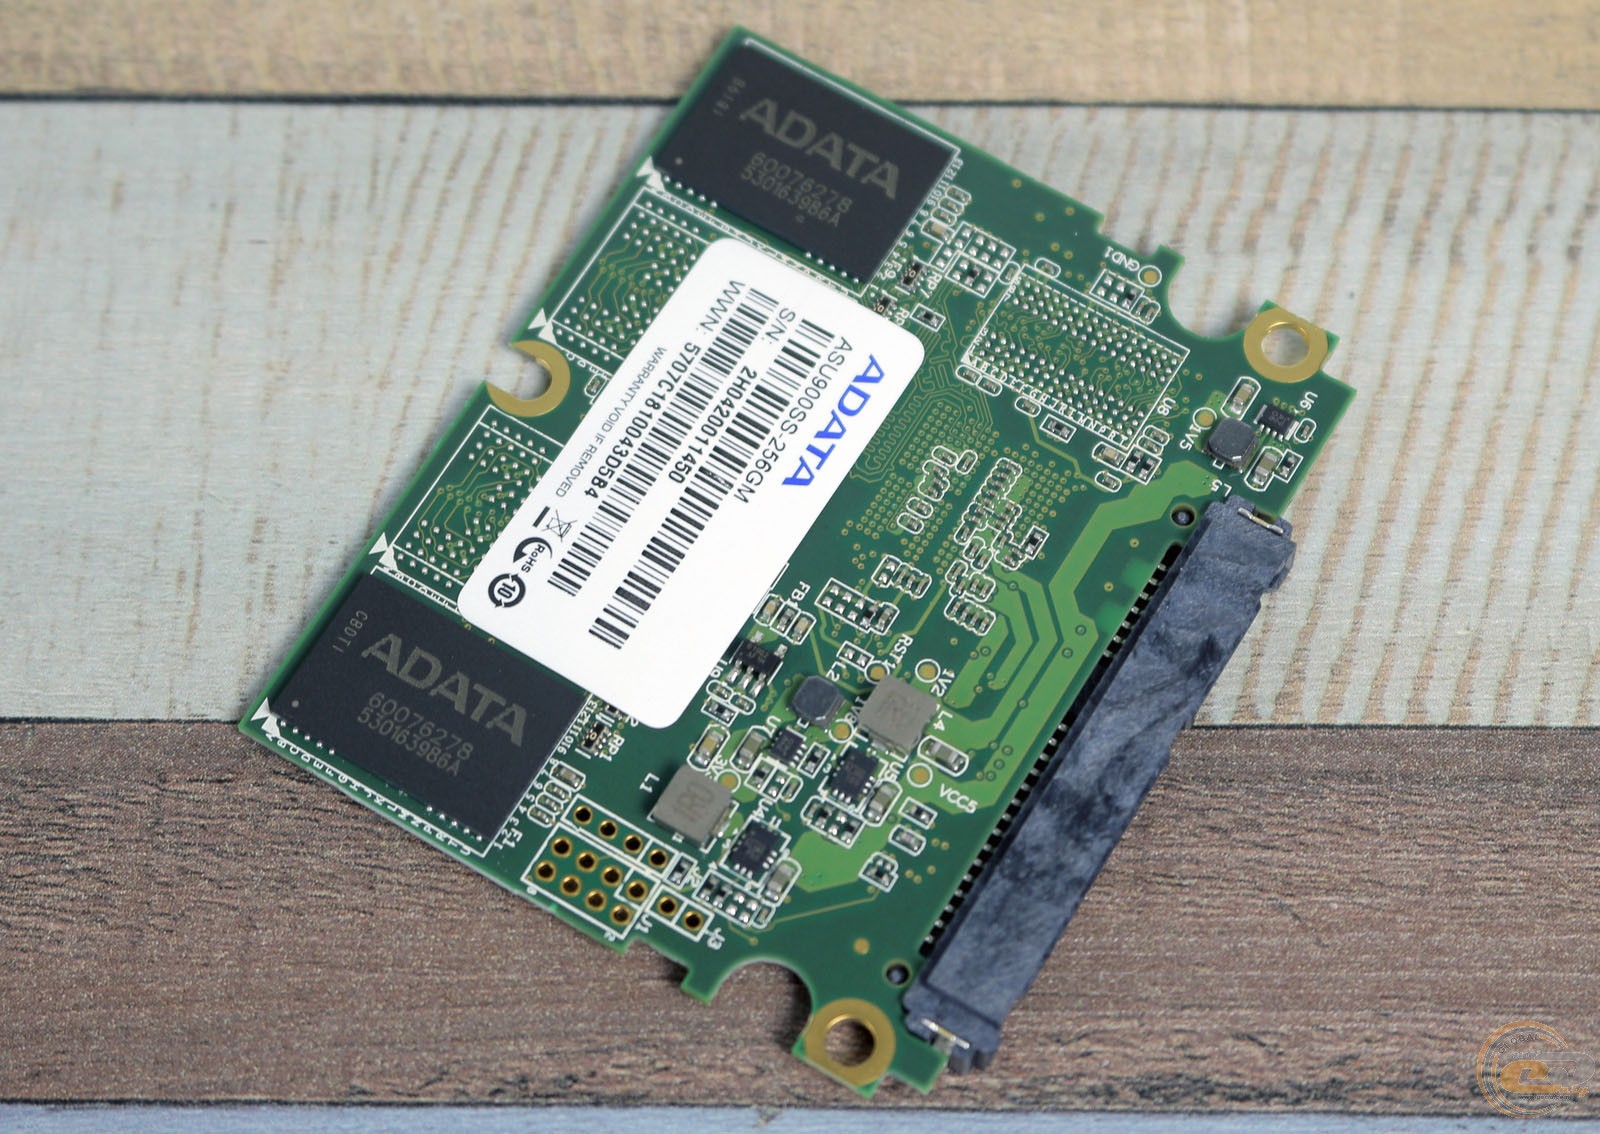 A data 900. SSD A-data Ultimate su900. Чип памяти AMD SSD 256gb. Микросхема SSD 900.